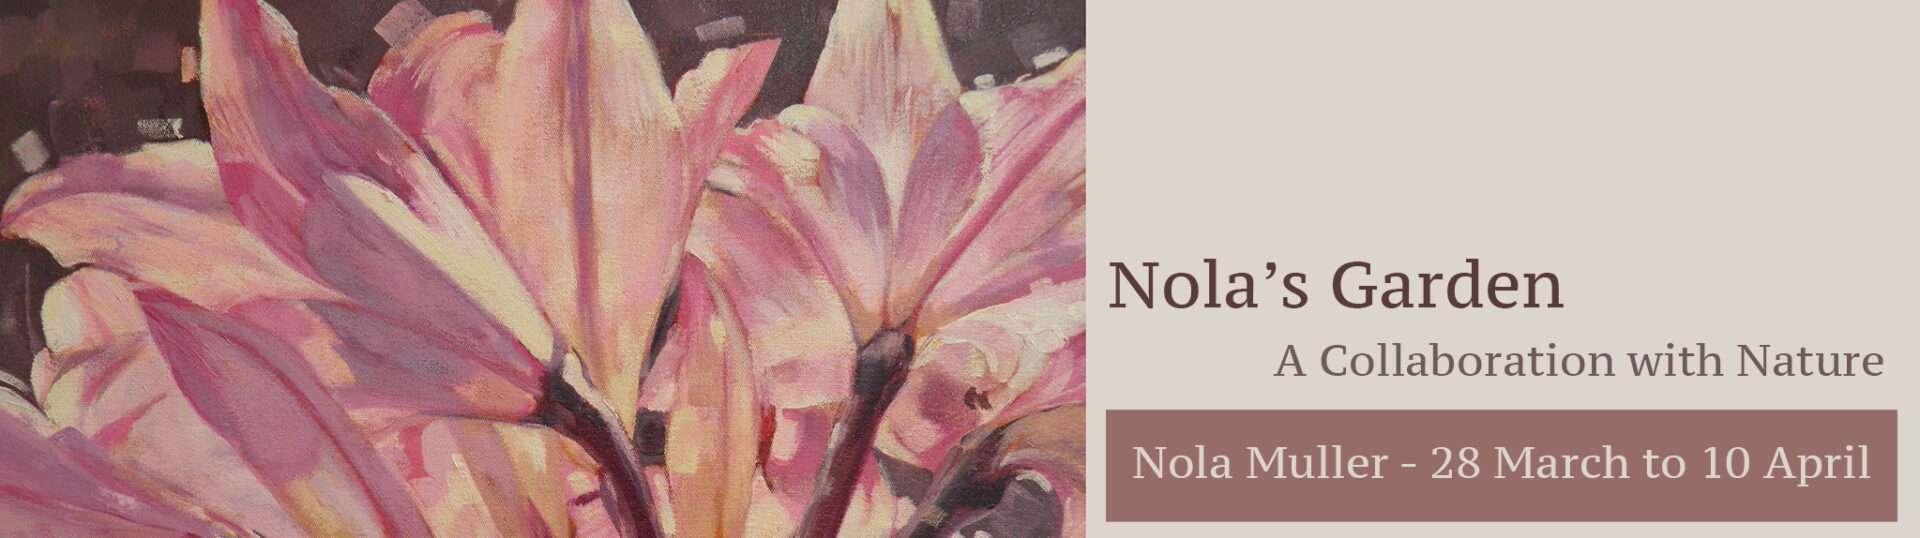 The Studio Art Gallery - Exhibition Header - Nolas Garden - Nola Muller